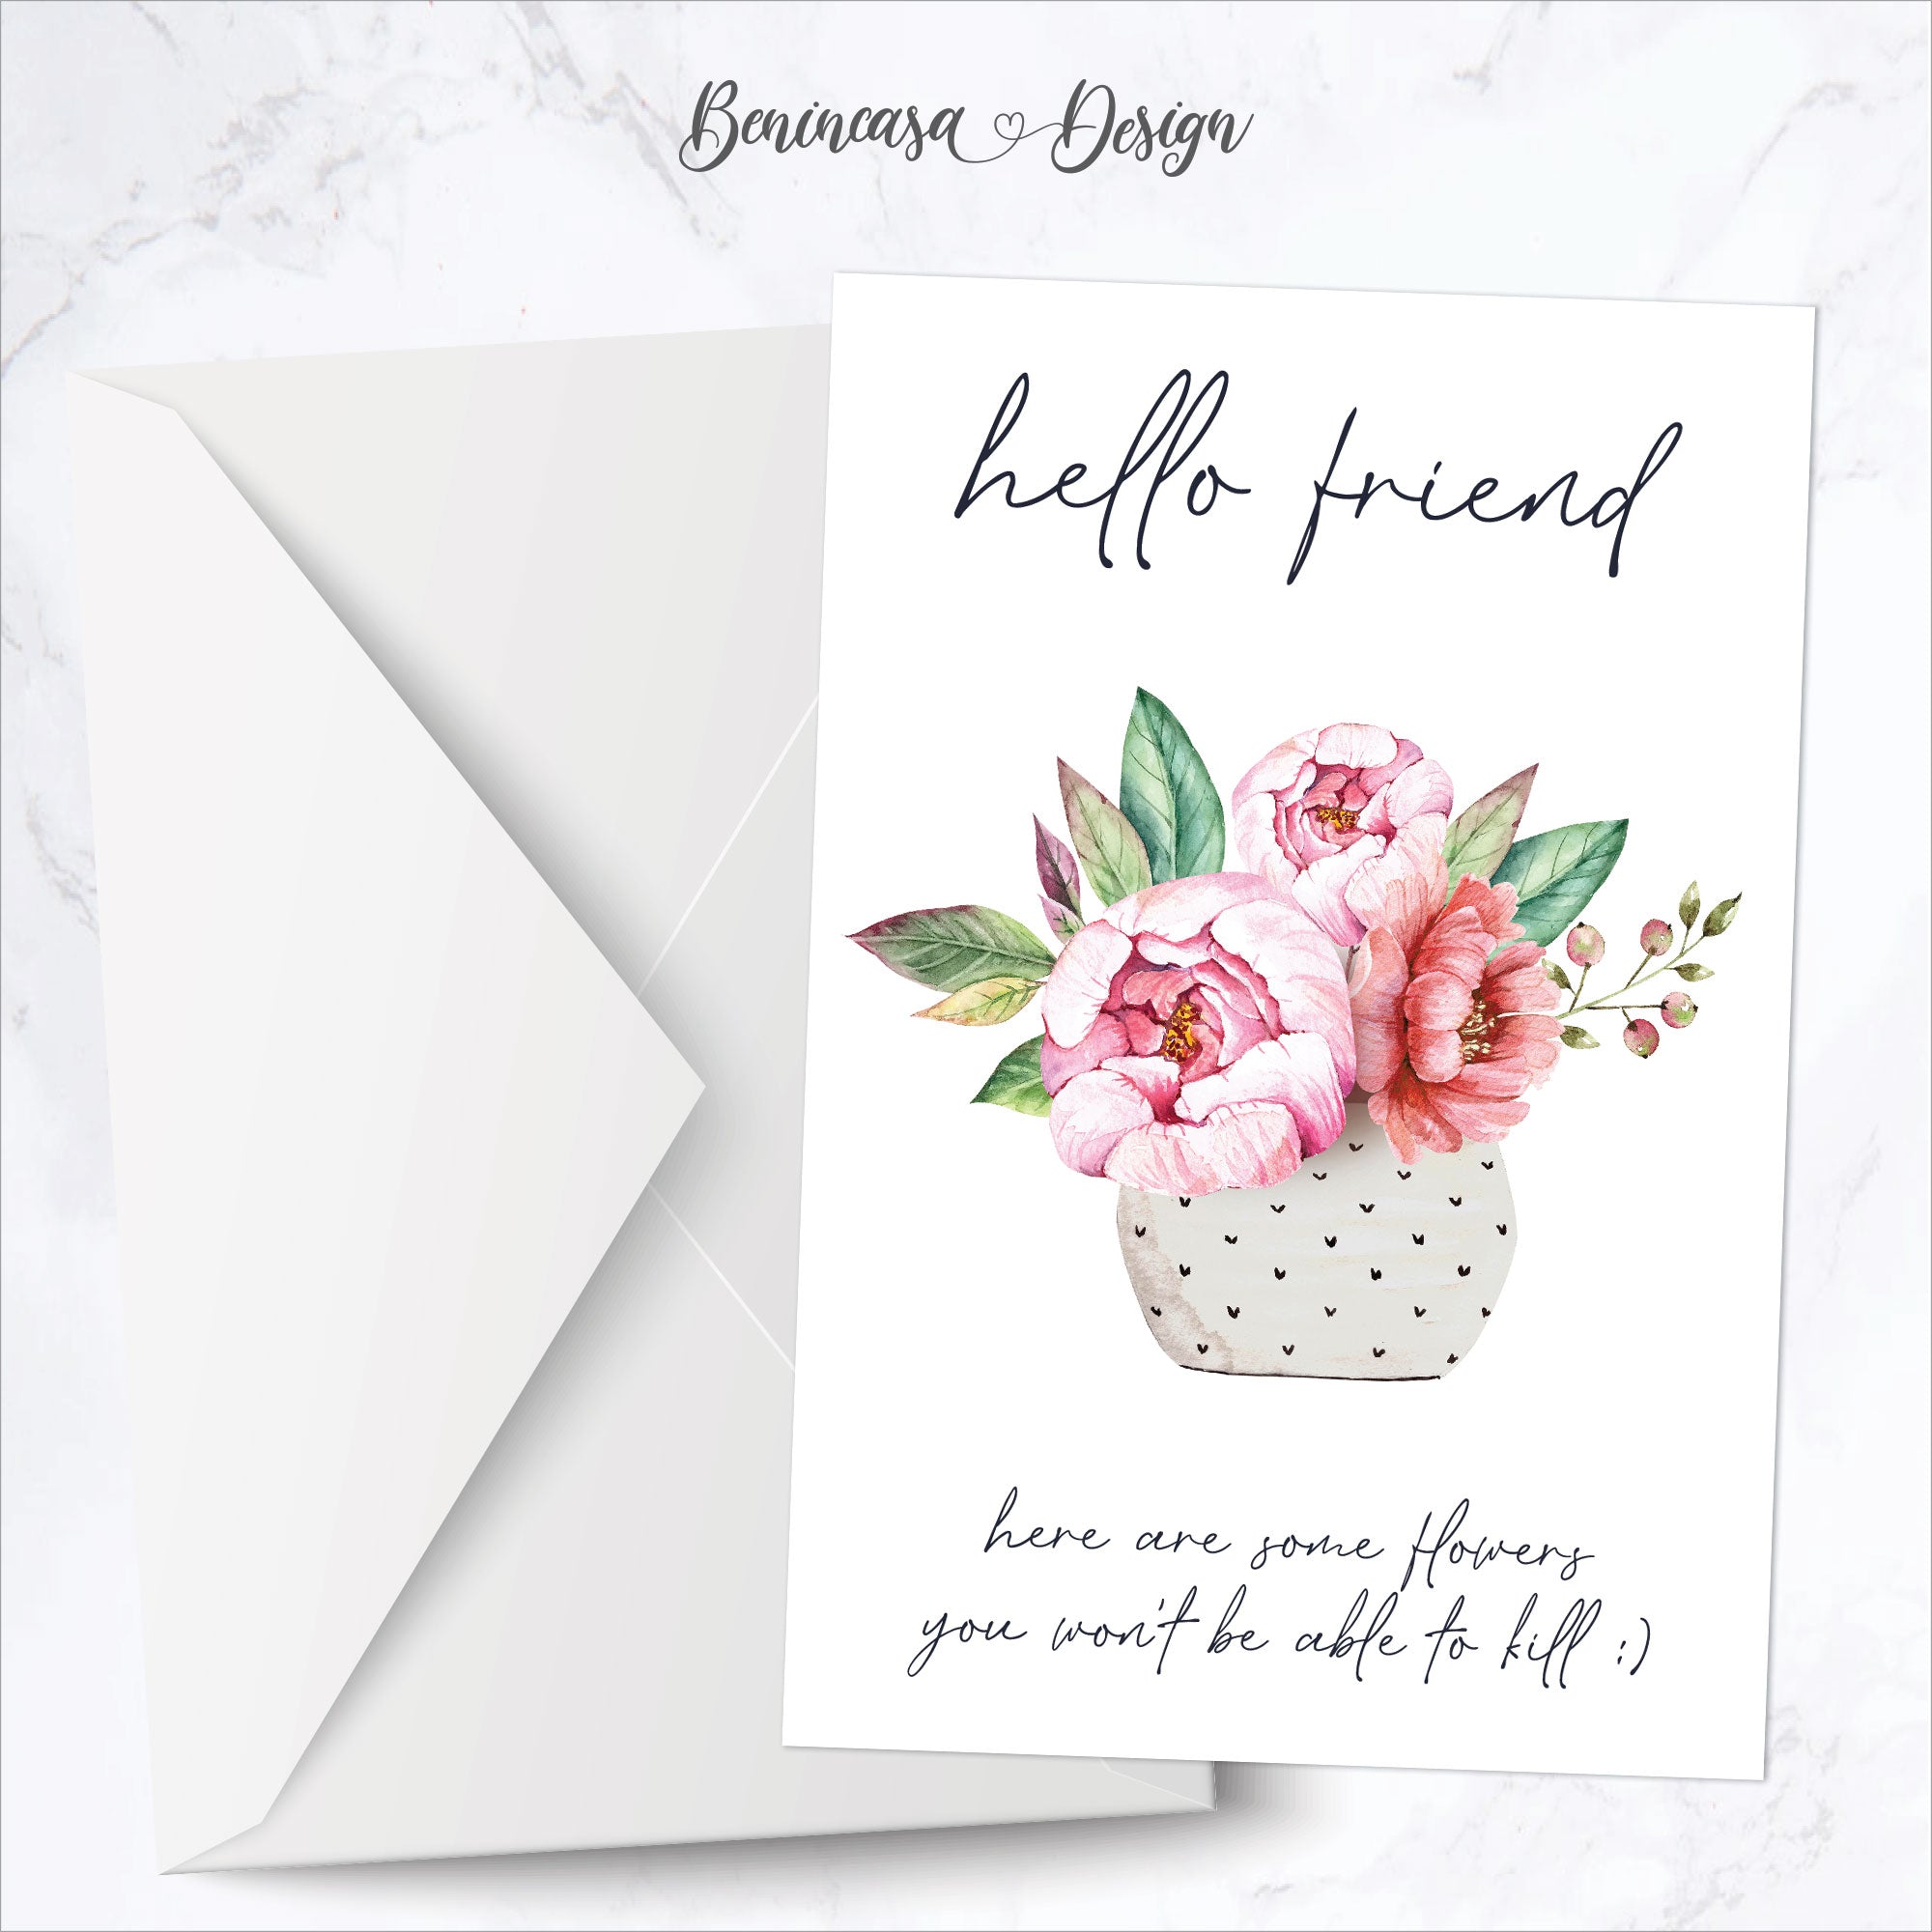 "Hello Friend" Greeting Card